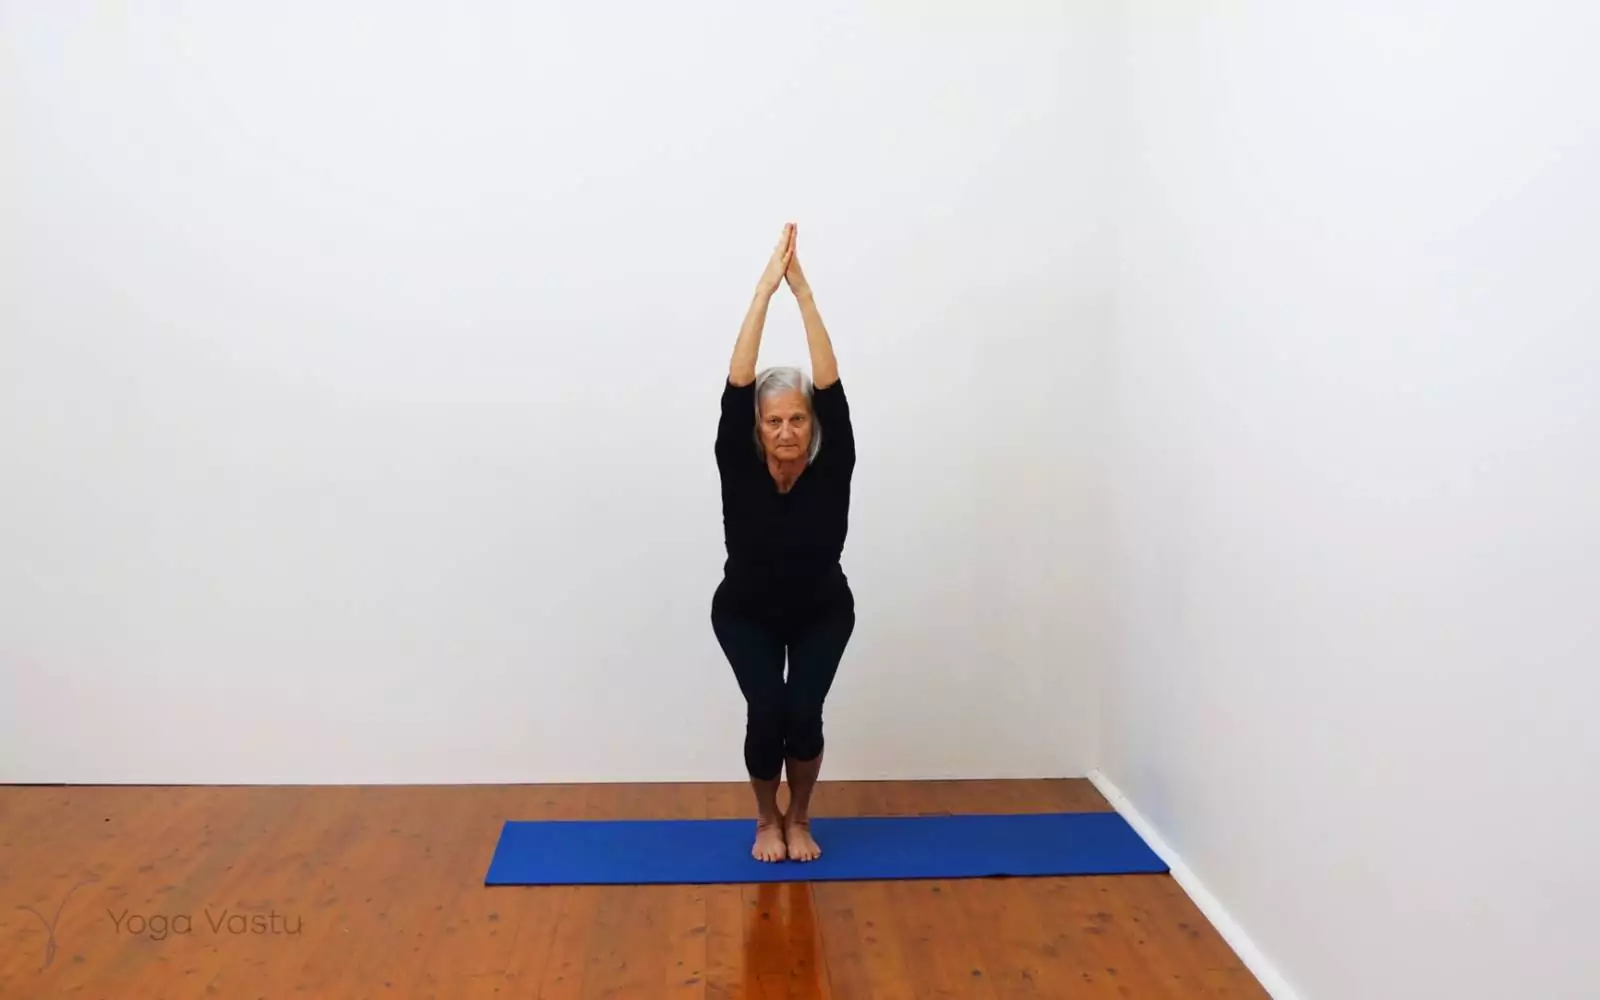 Prayer (Pranamasana) – Yoga Poses Guide by WorkoutLabs